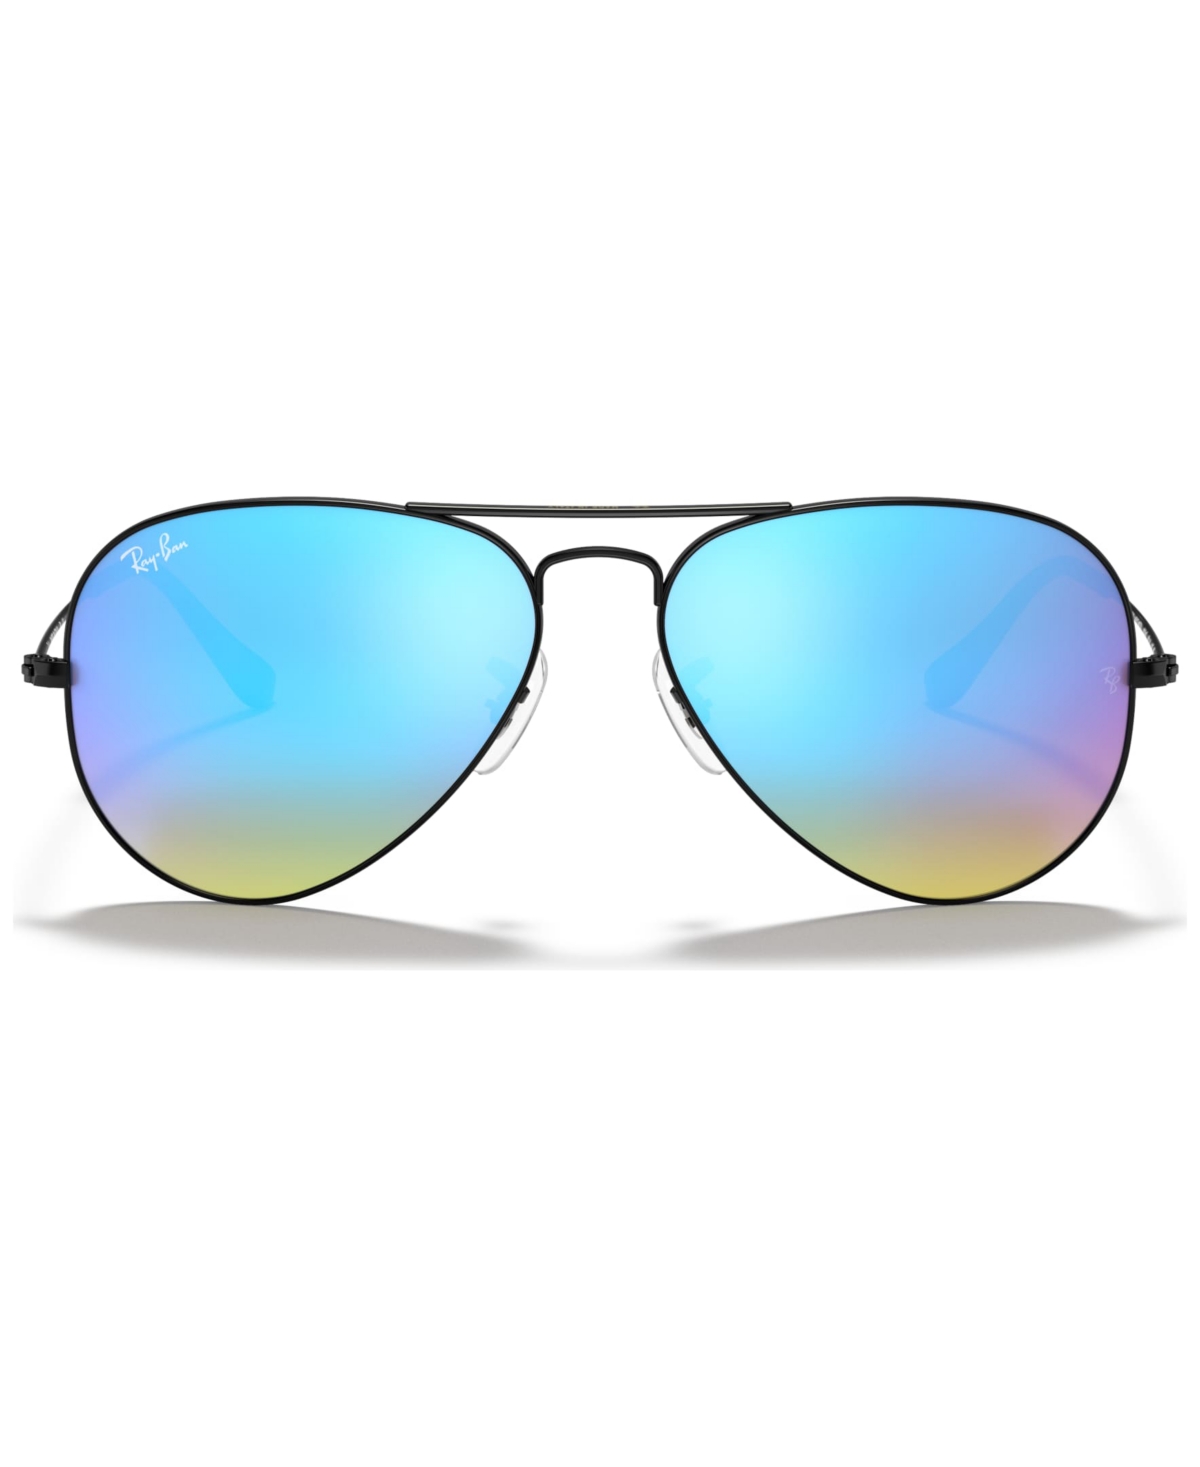 Ray Ban Sunglasses, Rb3025 Aviator Flash Lenses Gradient In Black,blue Gradient Mirrored